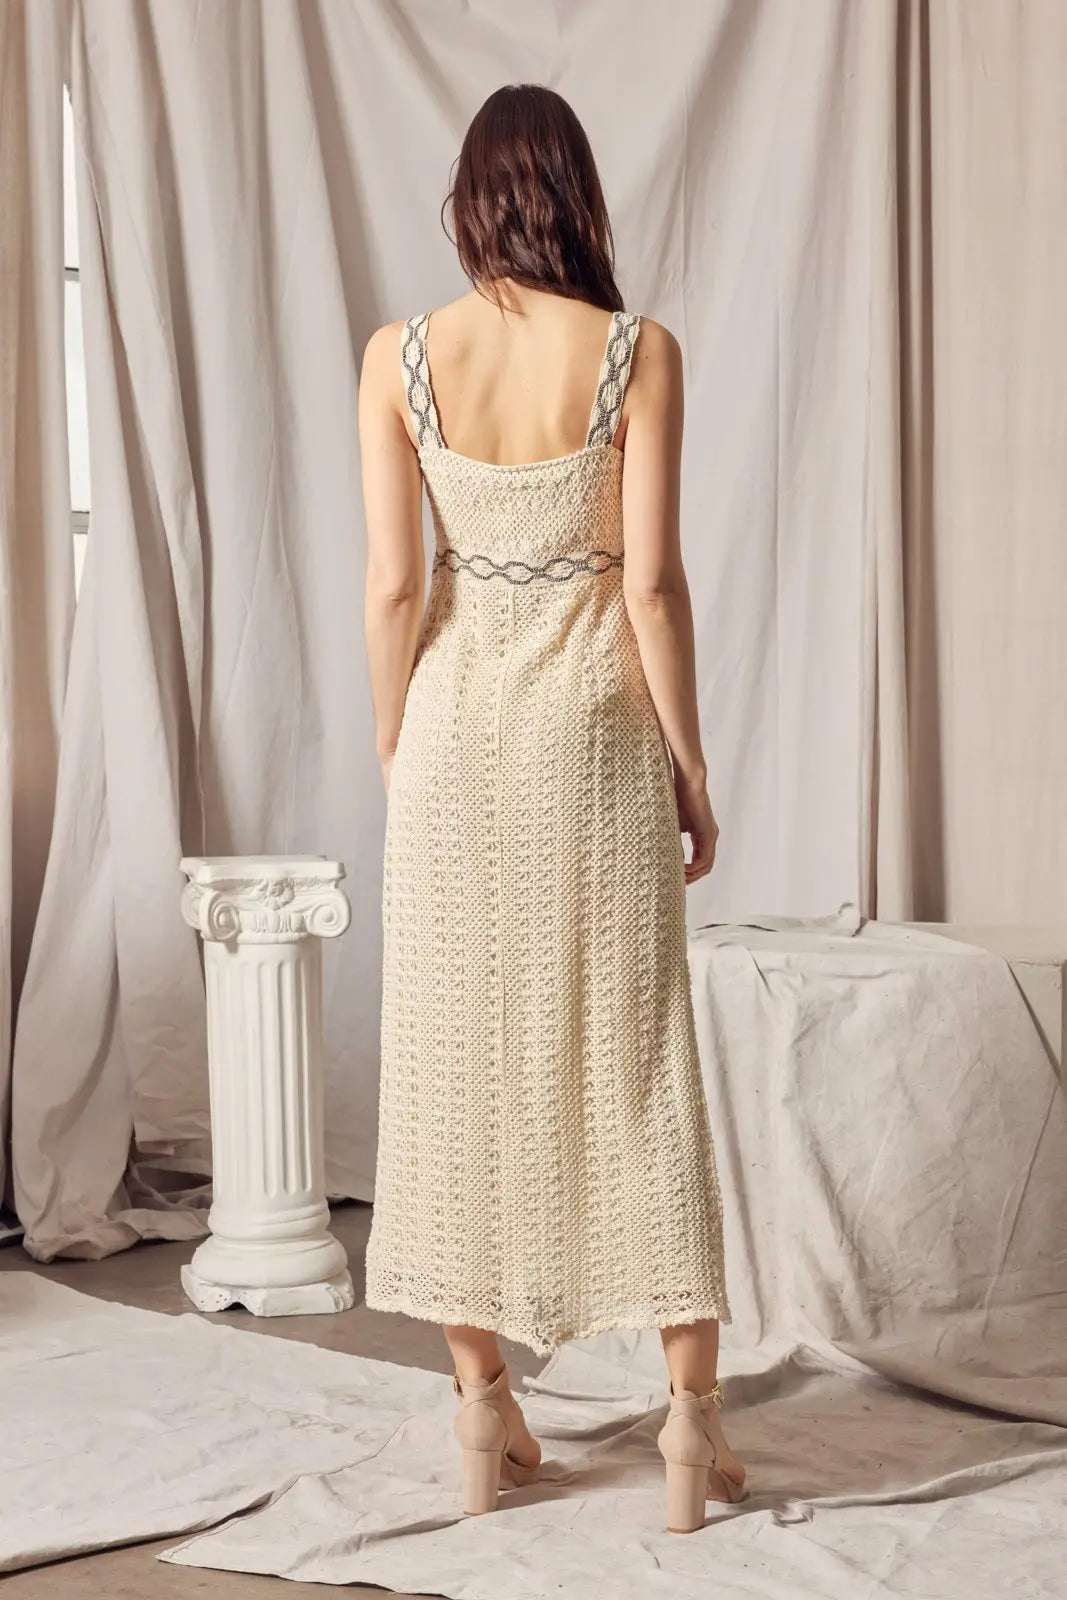 Sale- The Mikayla Crochet Dress - Premium Dresses from Reveuse - Just $54! Shop now at Ida Louise Boutique